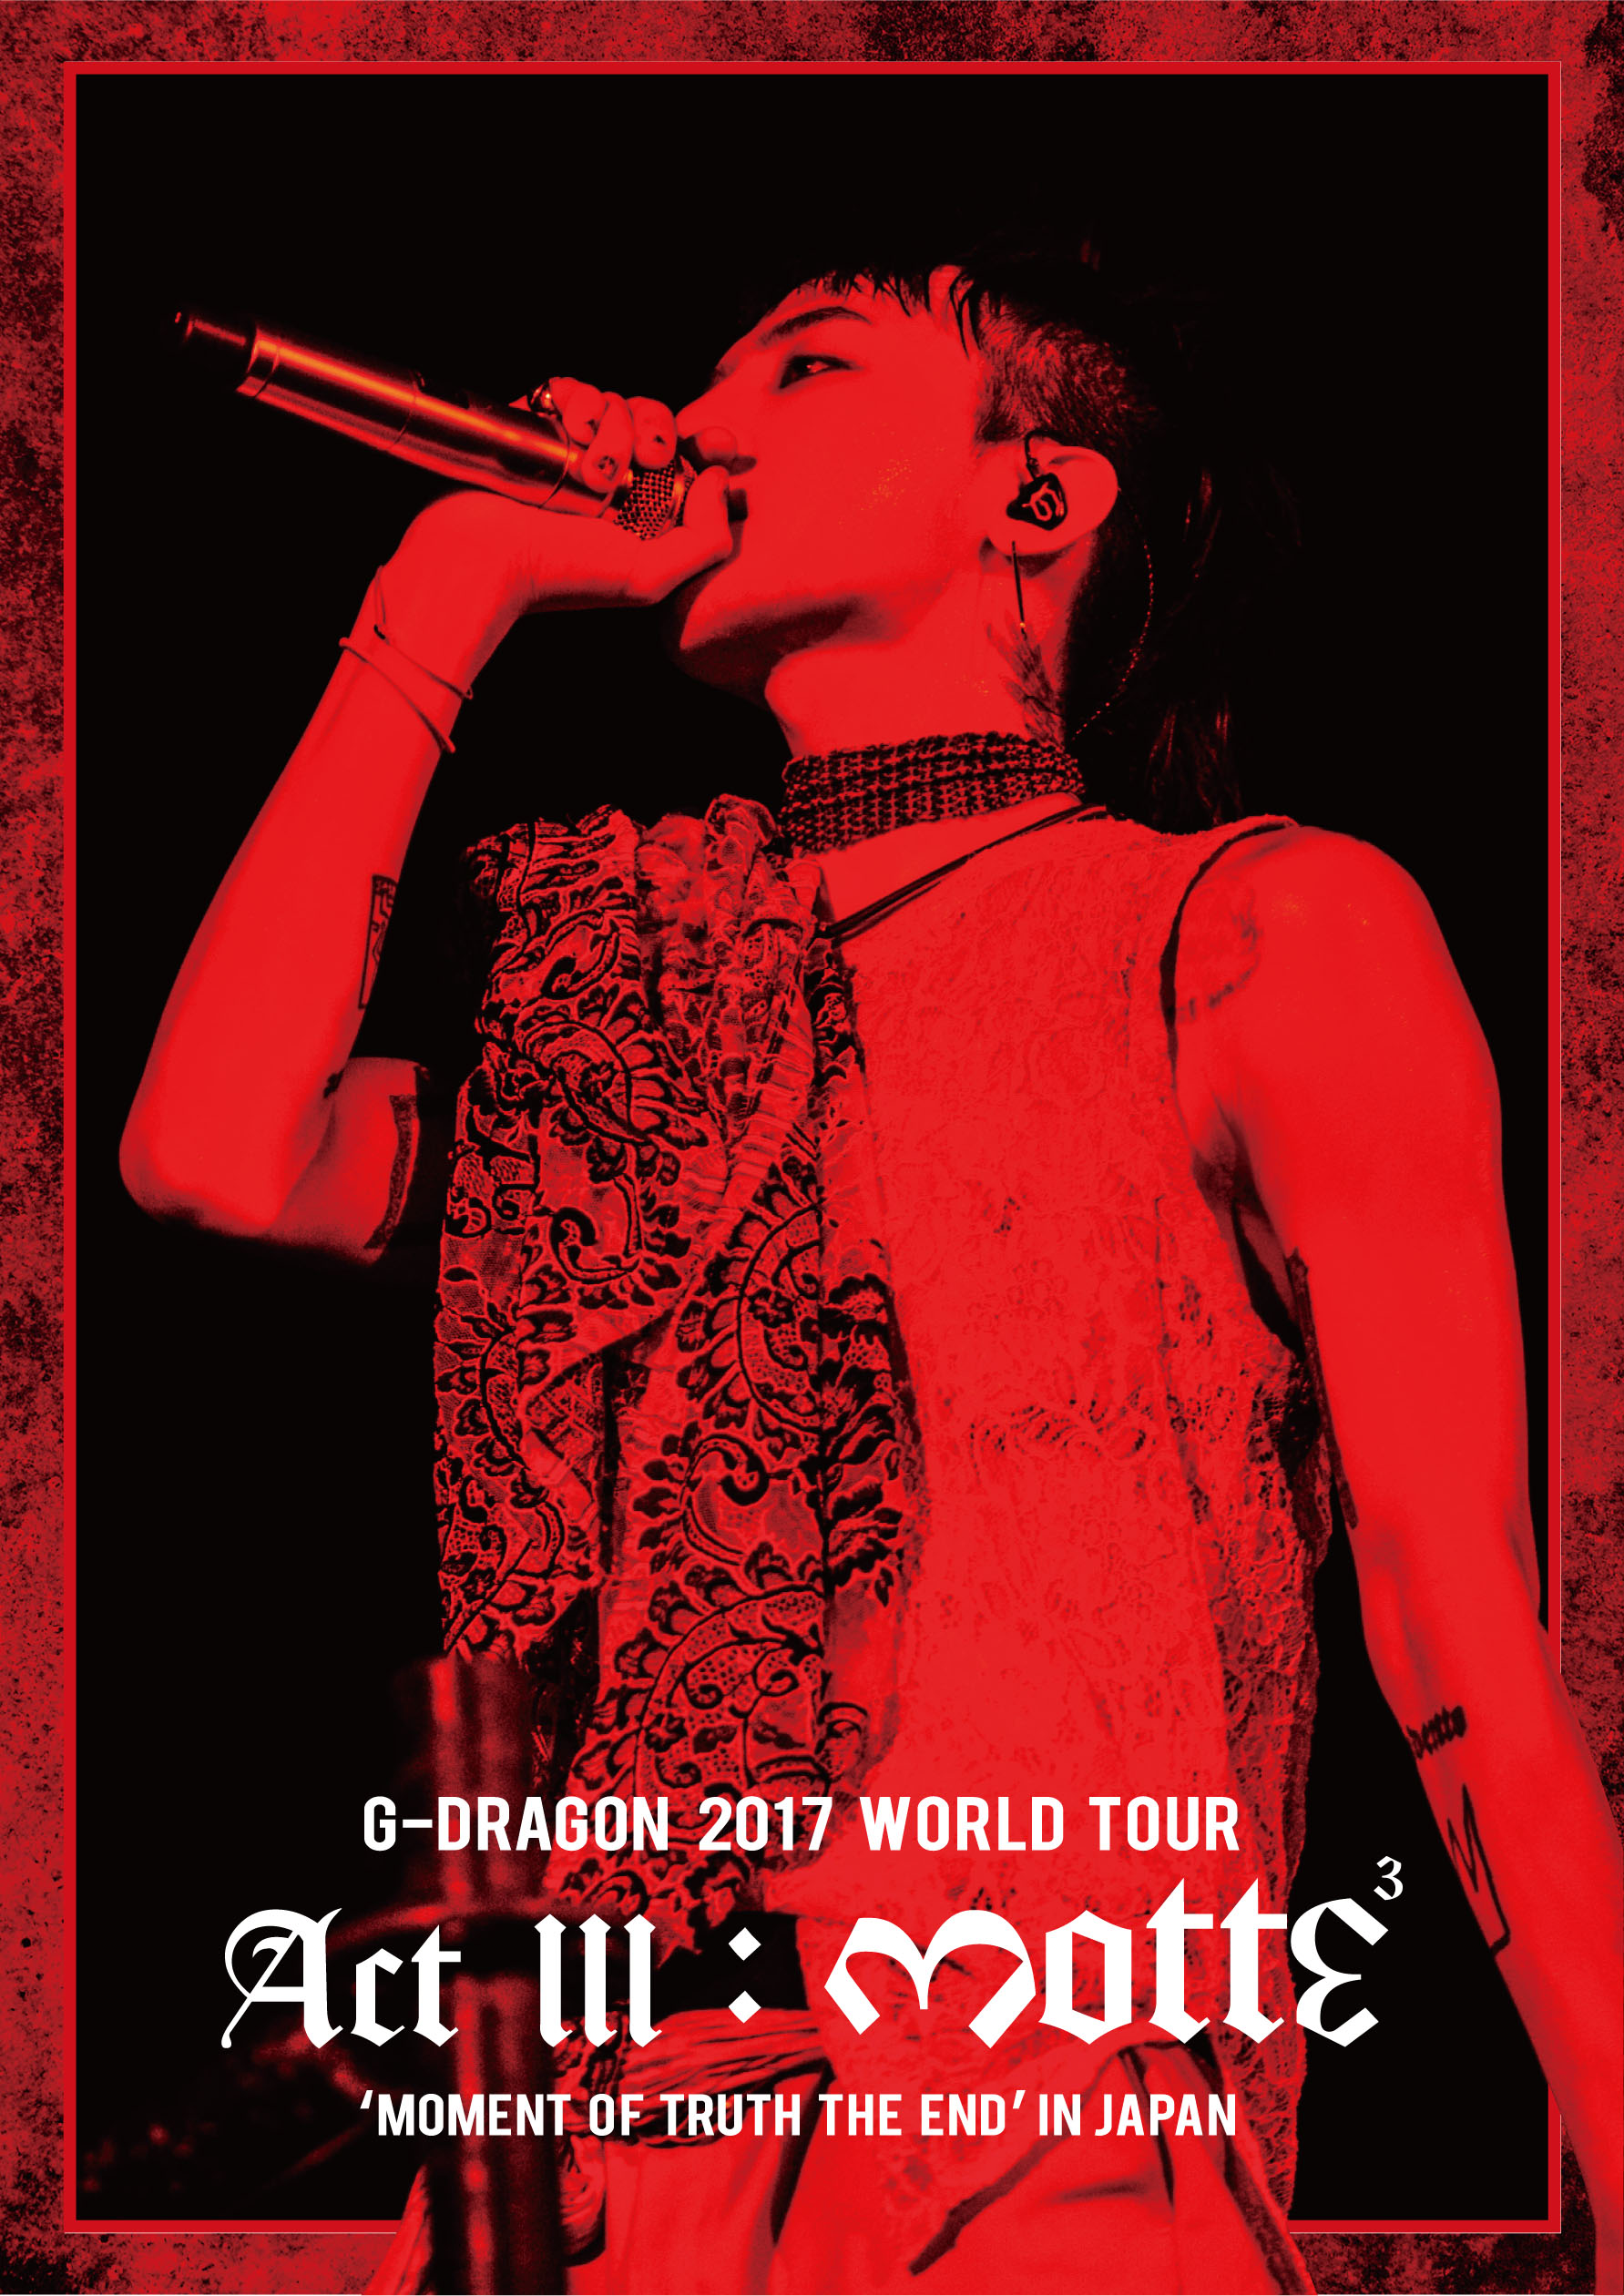 BIGBANGのリーダー・G-DRAGONのソロワールドツアー東​京ドーム公演映像作品が初登場1位を獲得